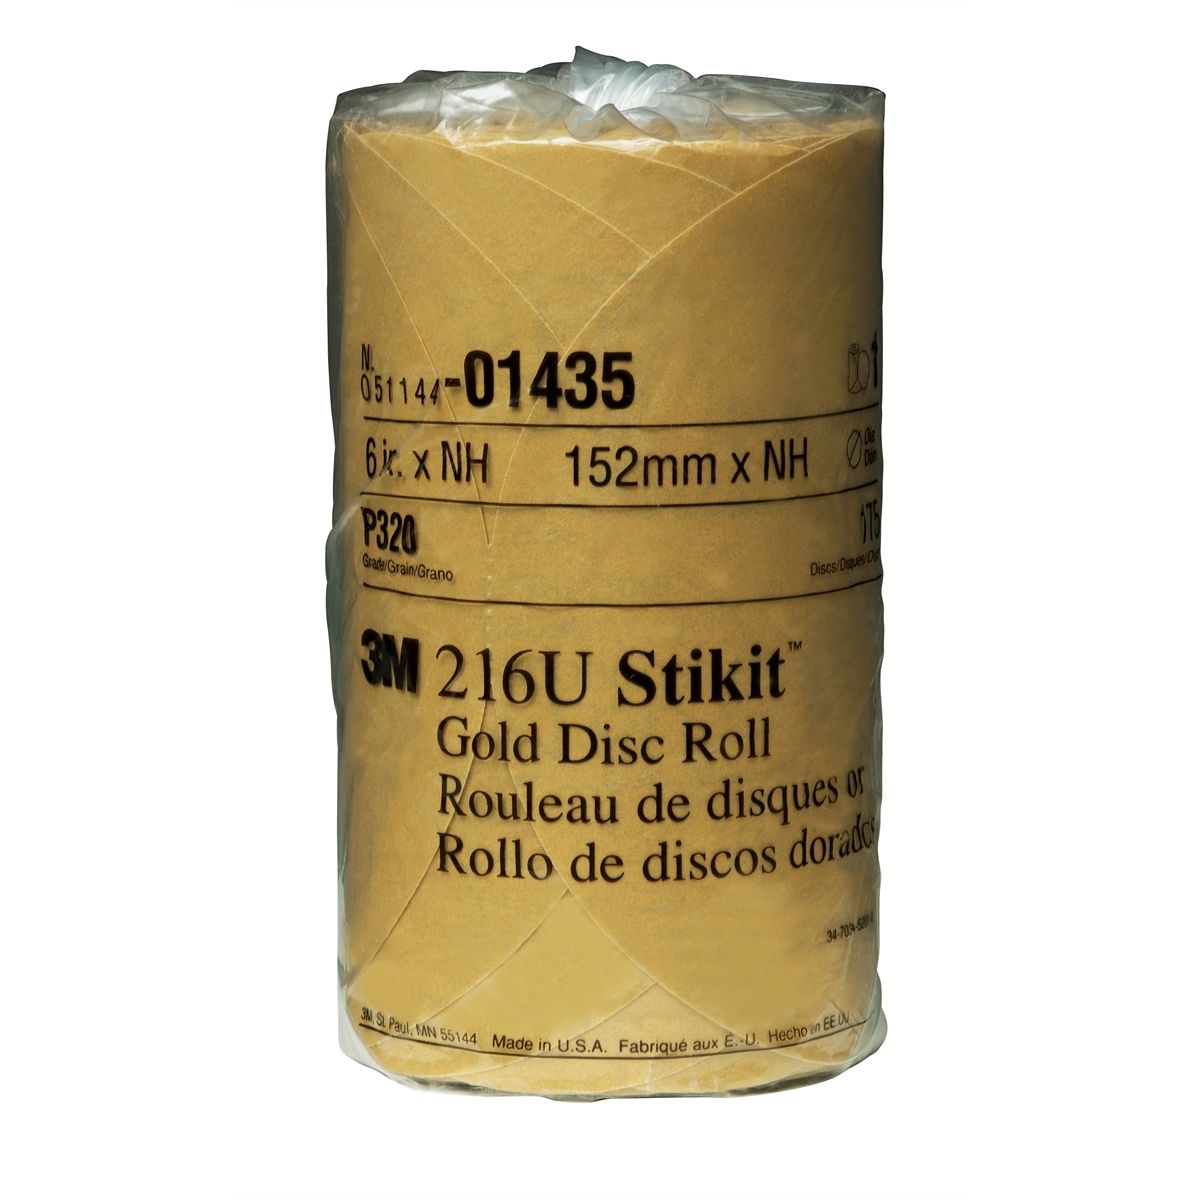 StikitT Gold Disc Roll - 320 Grade - 6 In